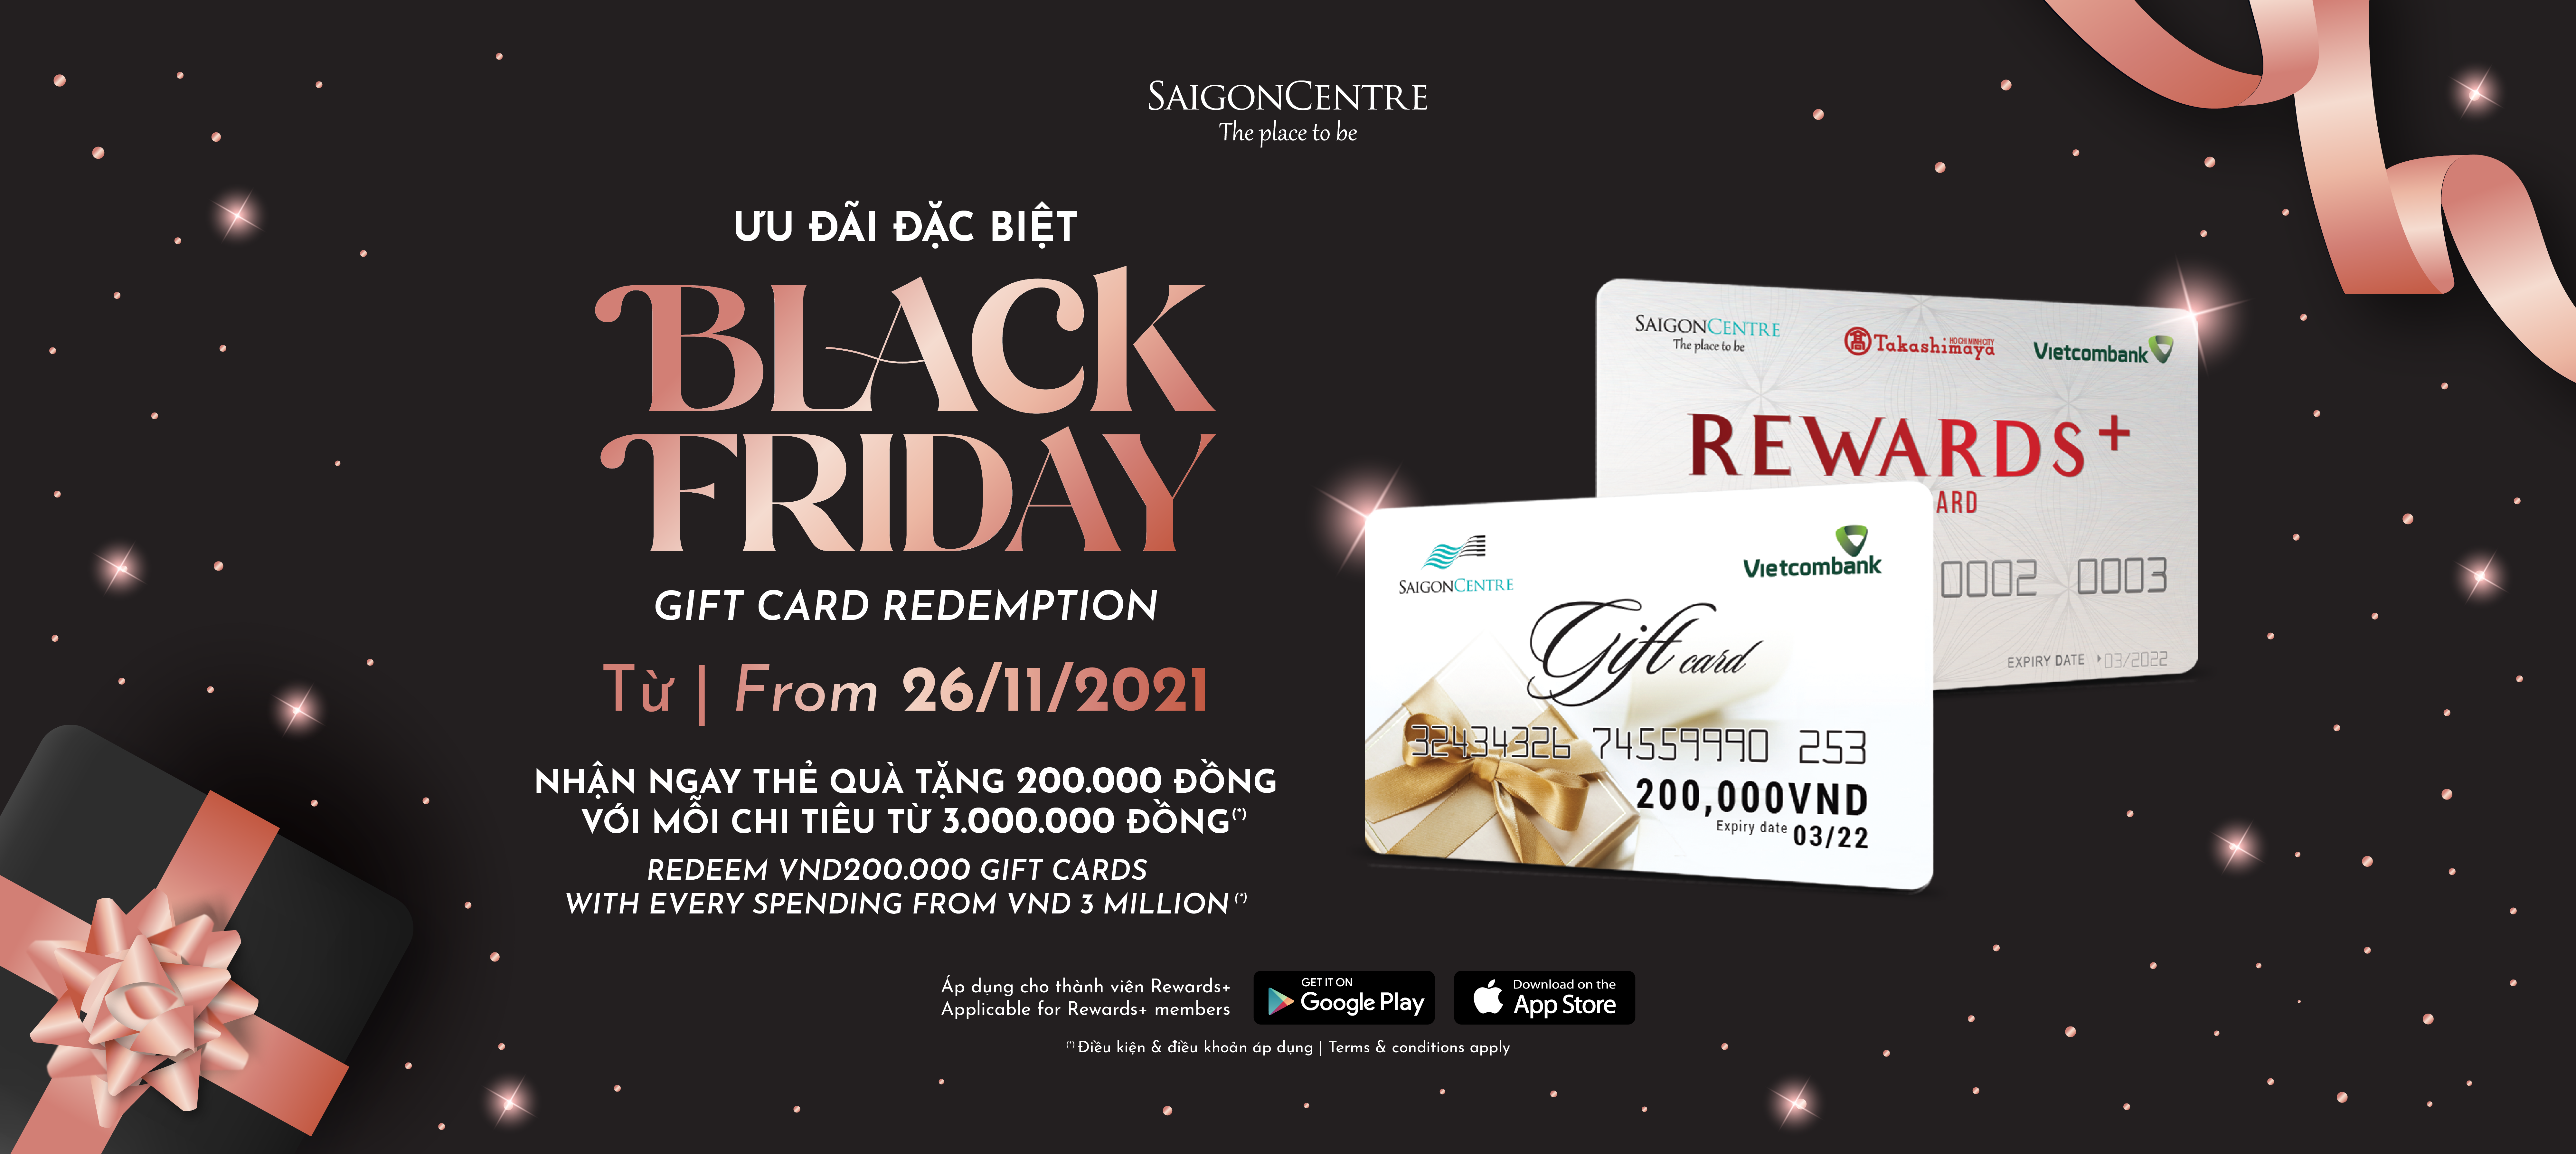 BLACK FRIDAY GIFT CARD REDEMPTION - SAIGON CENTRE